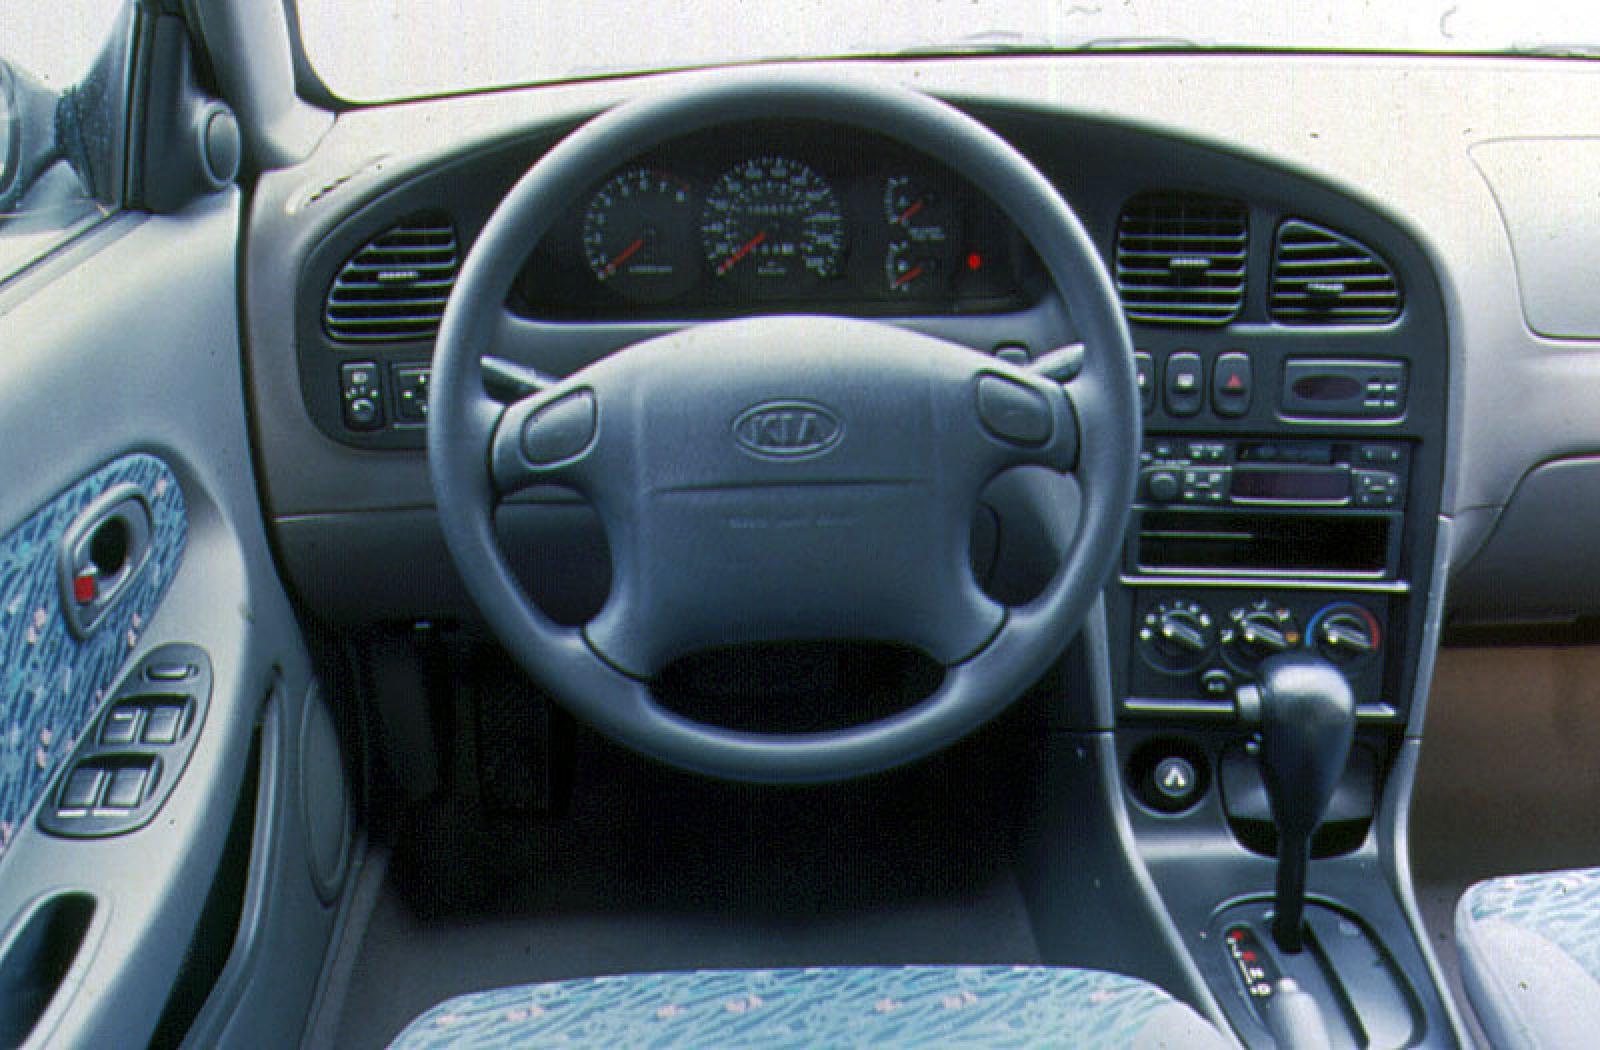 2001 Kia Sephia - Information and photos - Neo Drive